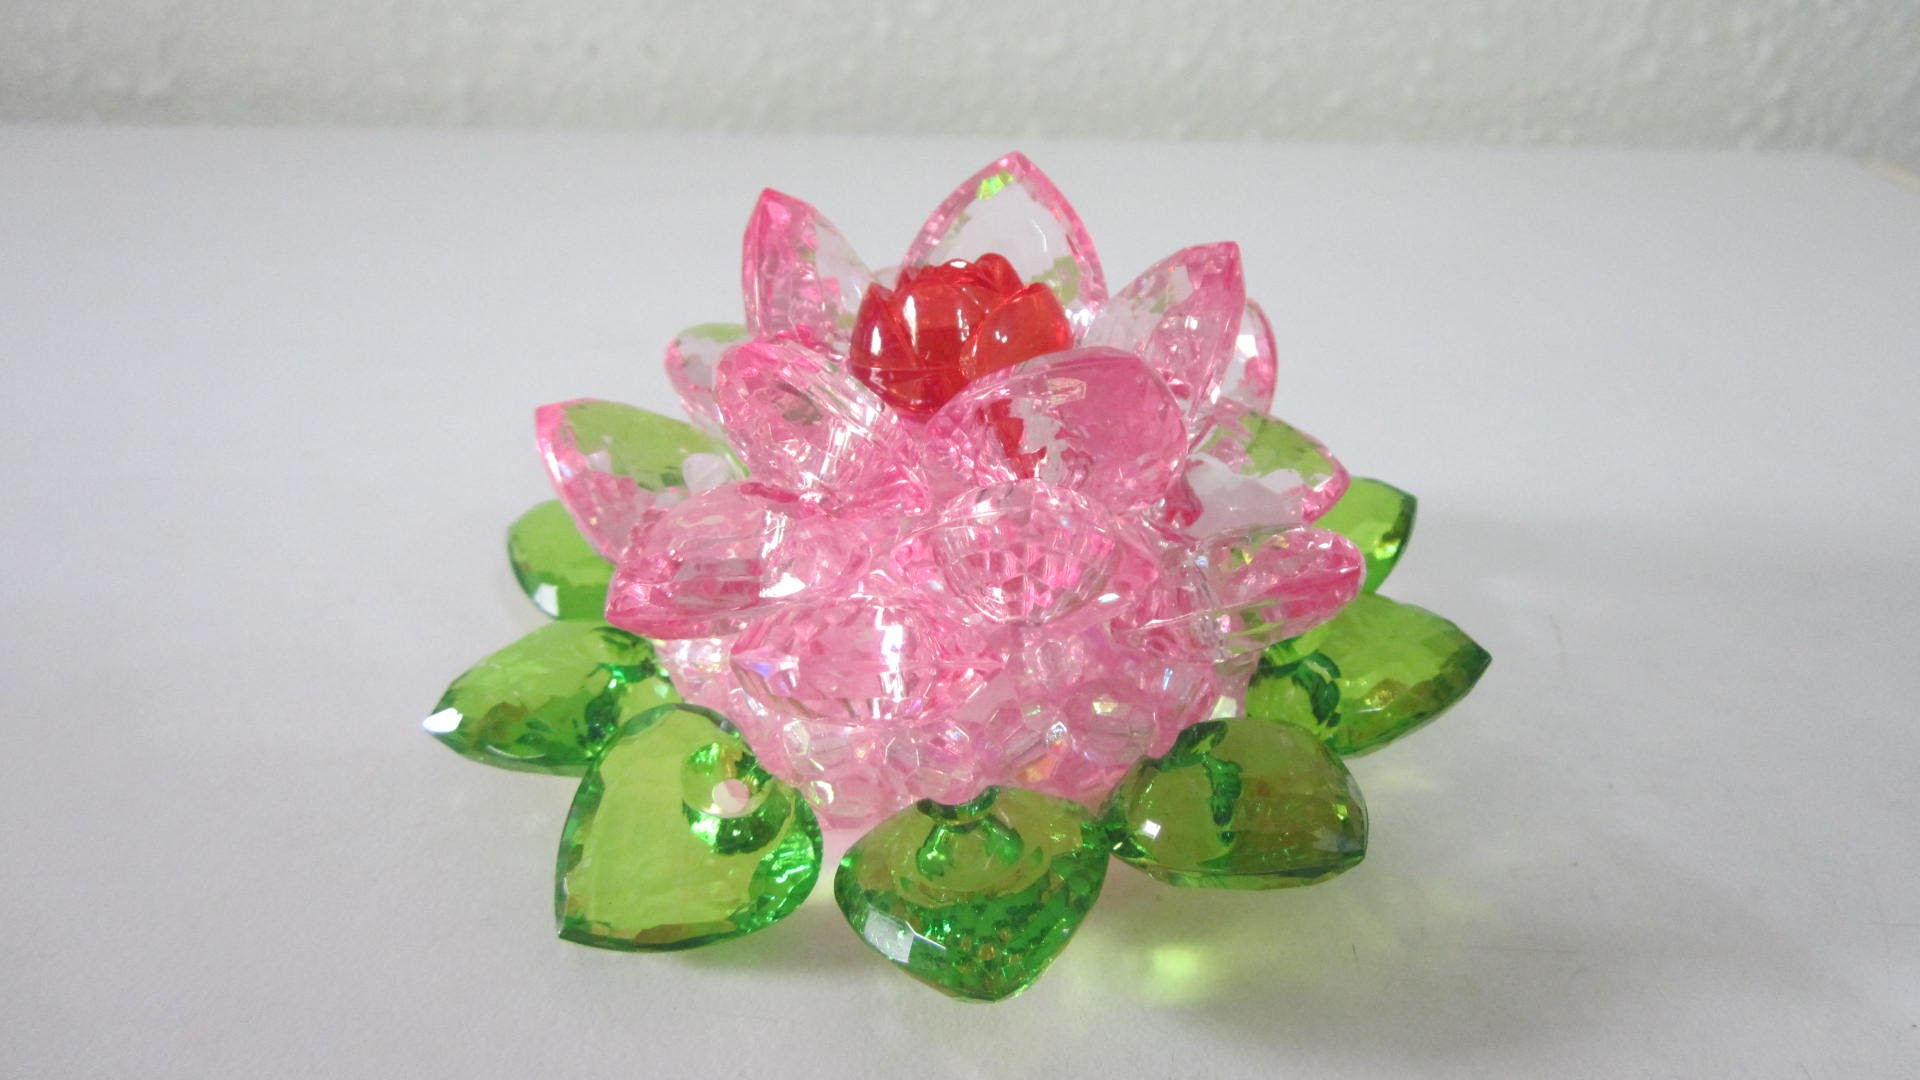 TUTORIAL - Beads Craft (Lotus Flower 蓮花) - YouTube